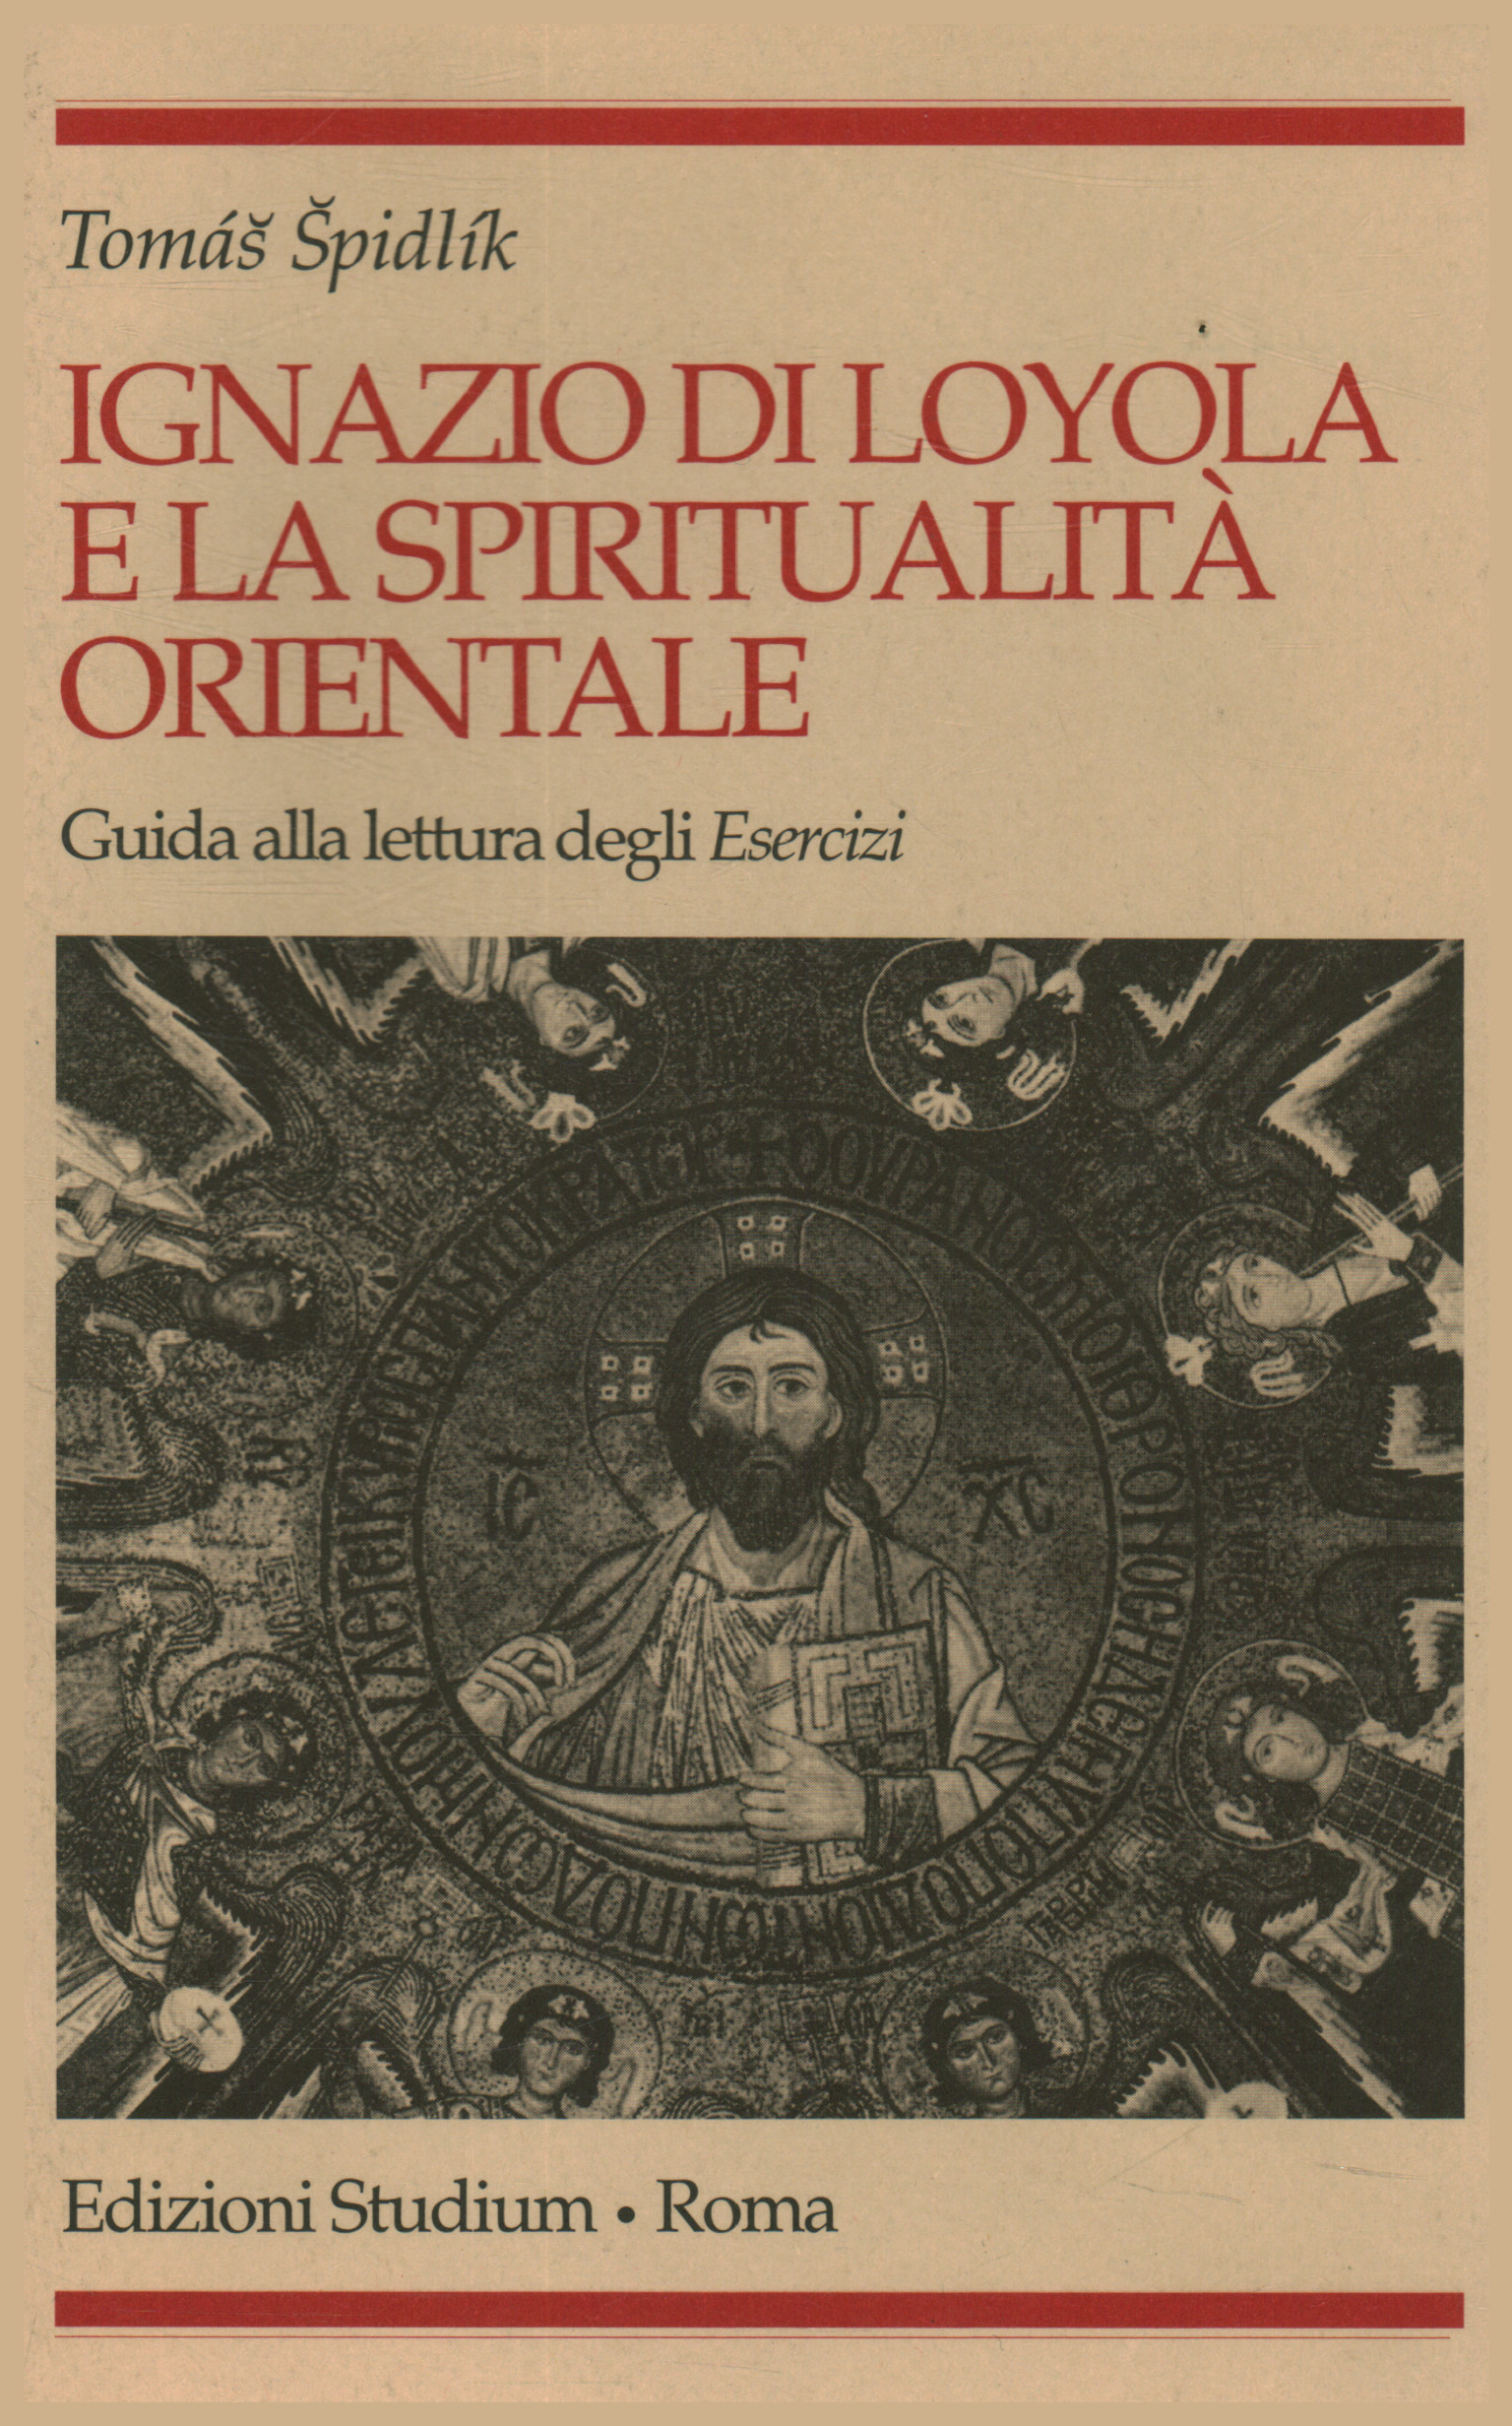 Ignatius of Loyola and spirituality